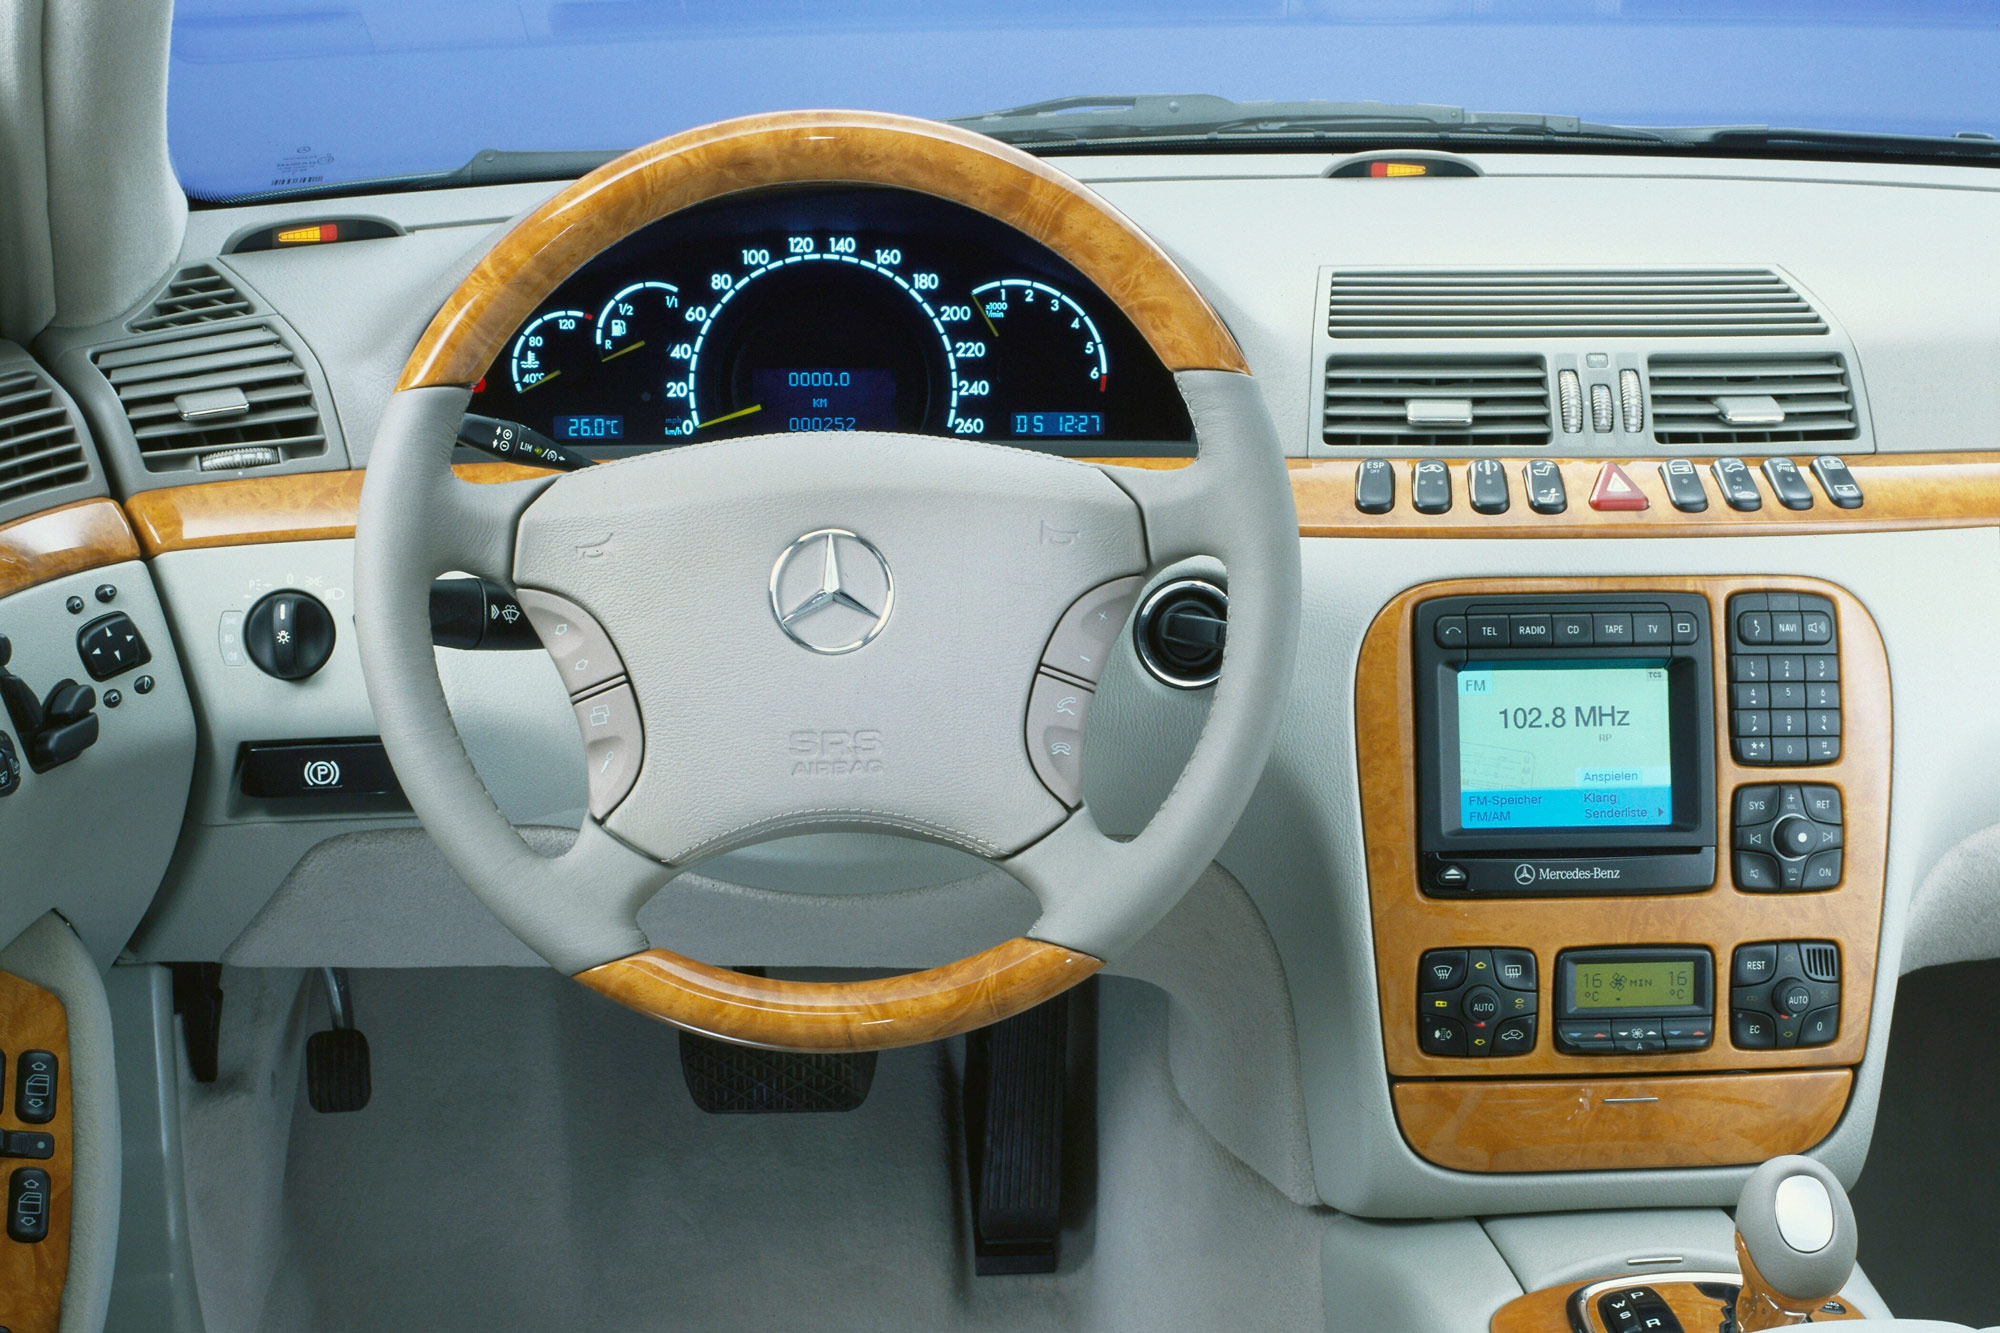 2004 Mercedes-Benz S-Class interior, steering wheel, and radio.